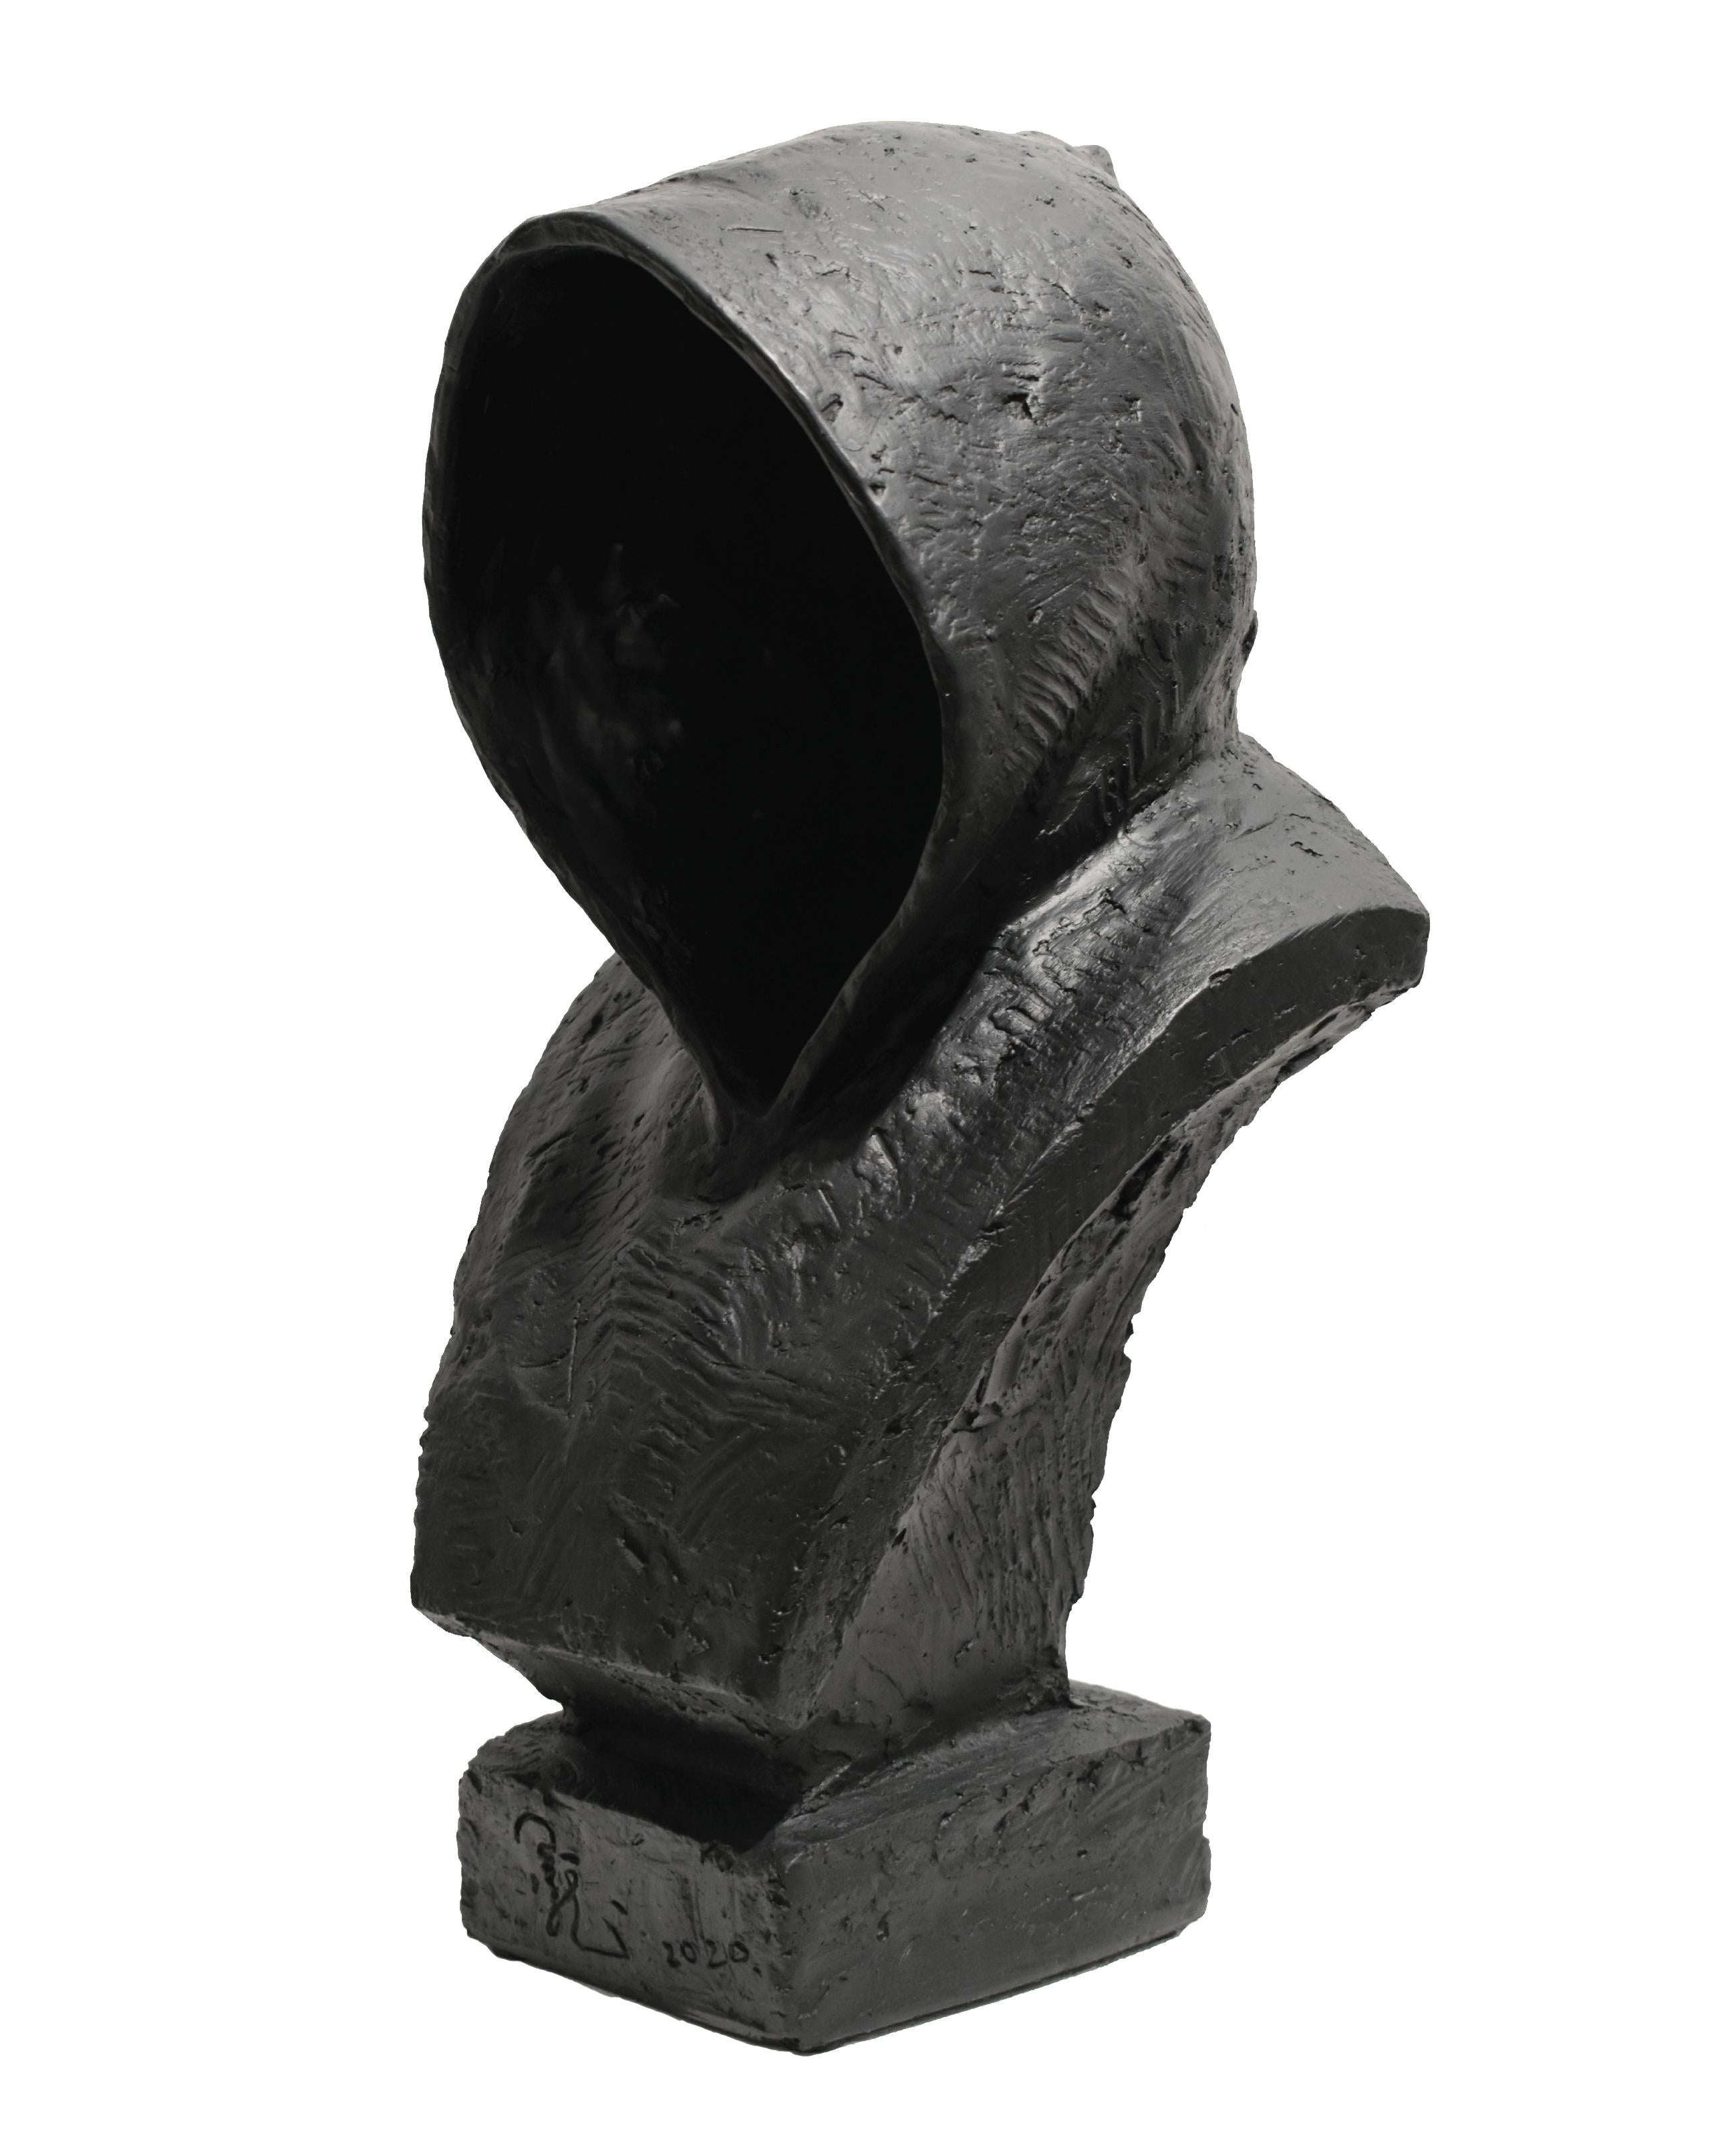 hooded figure statue